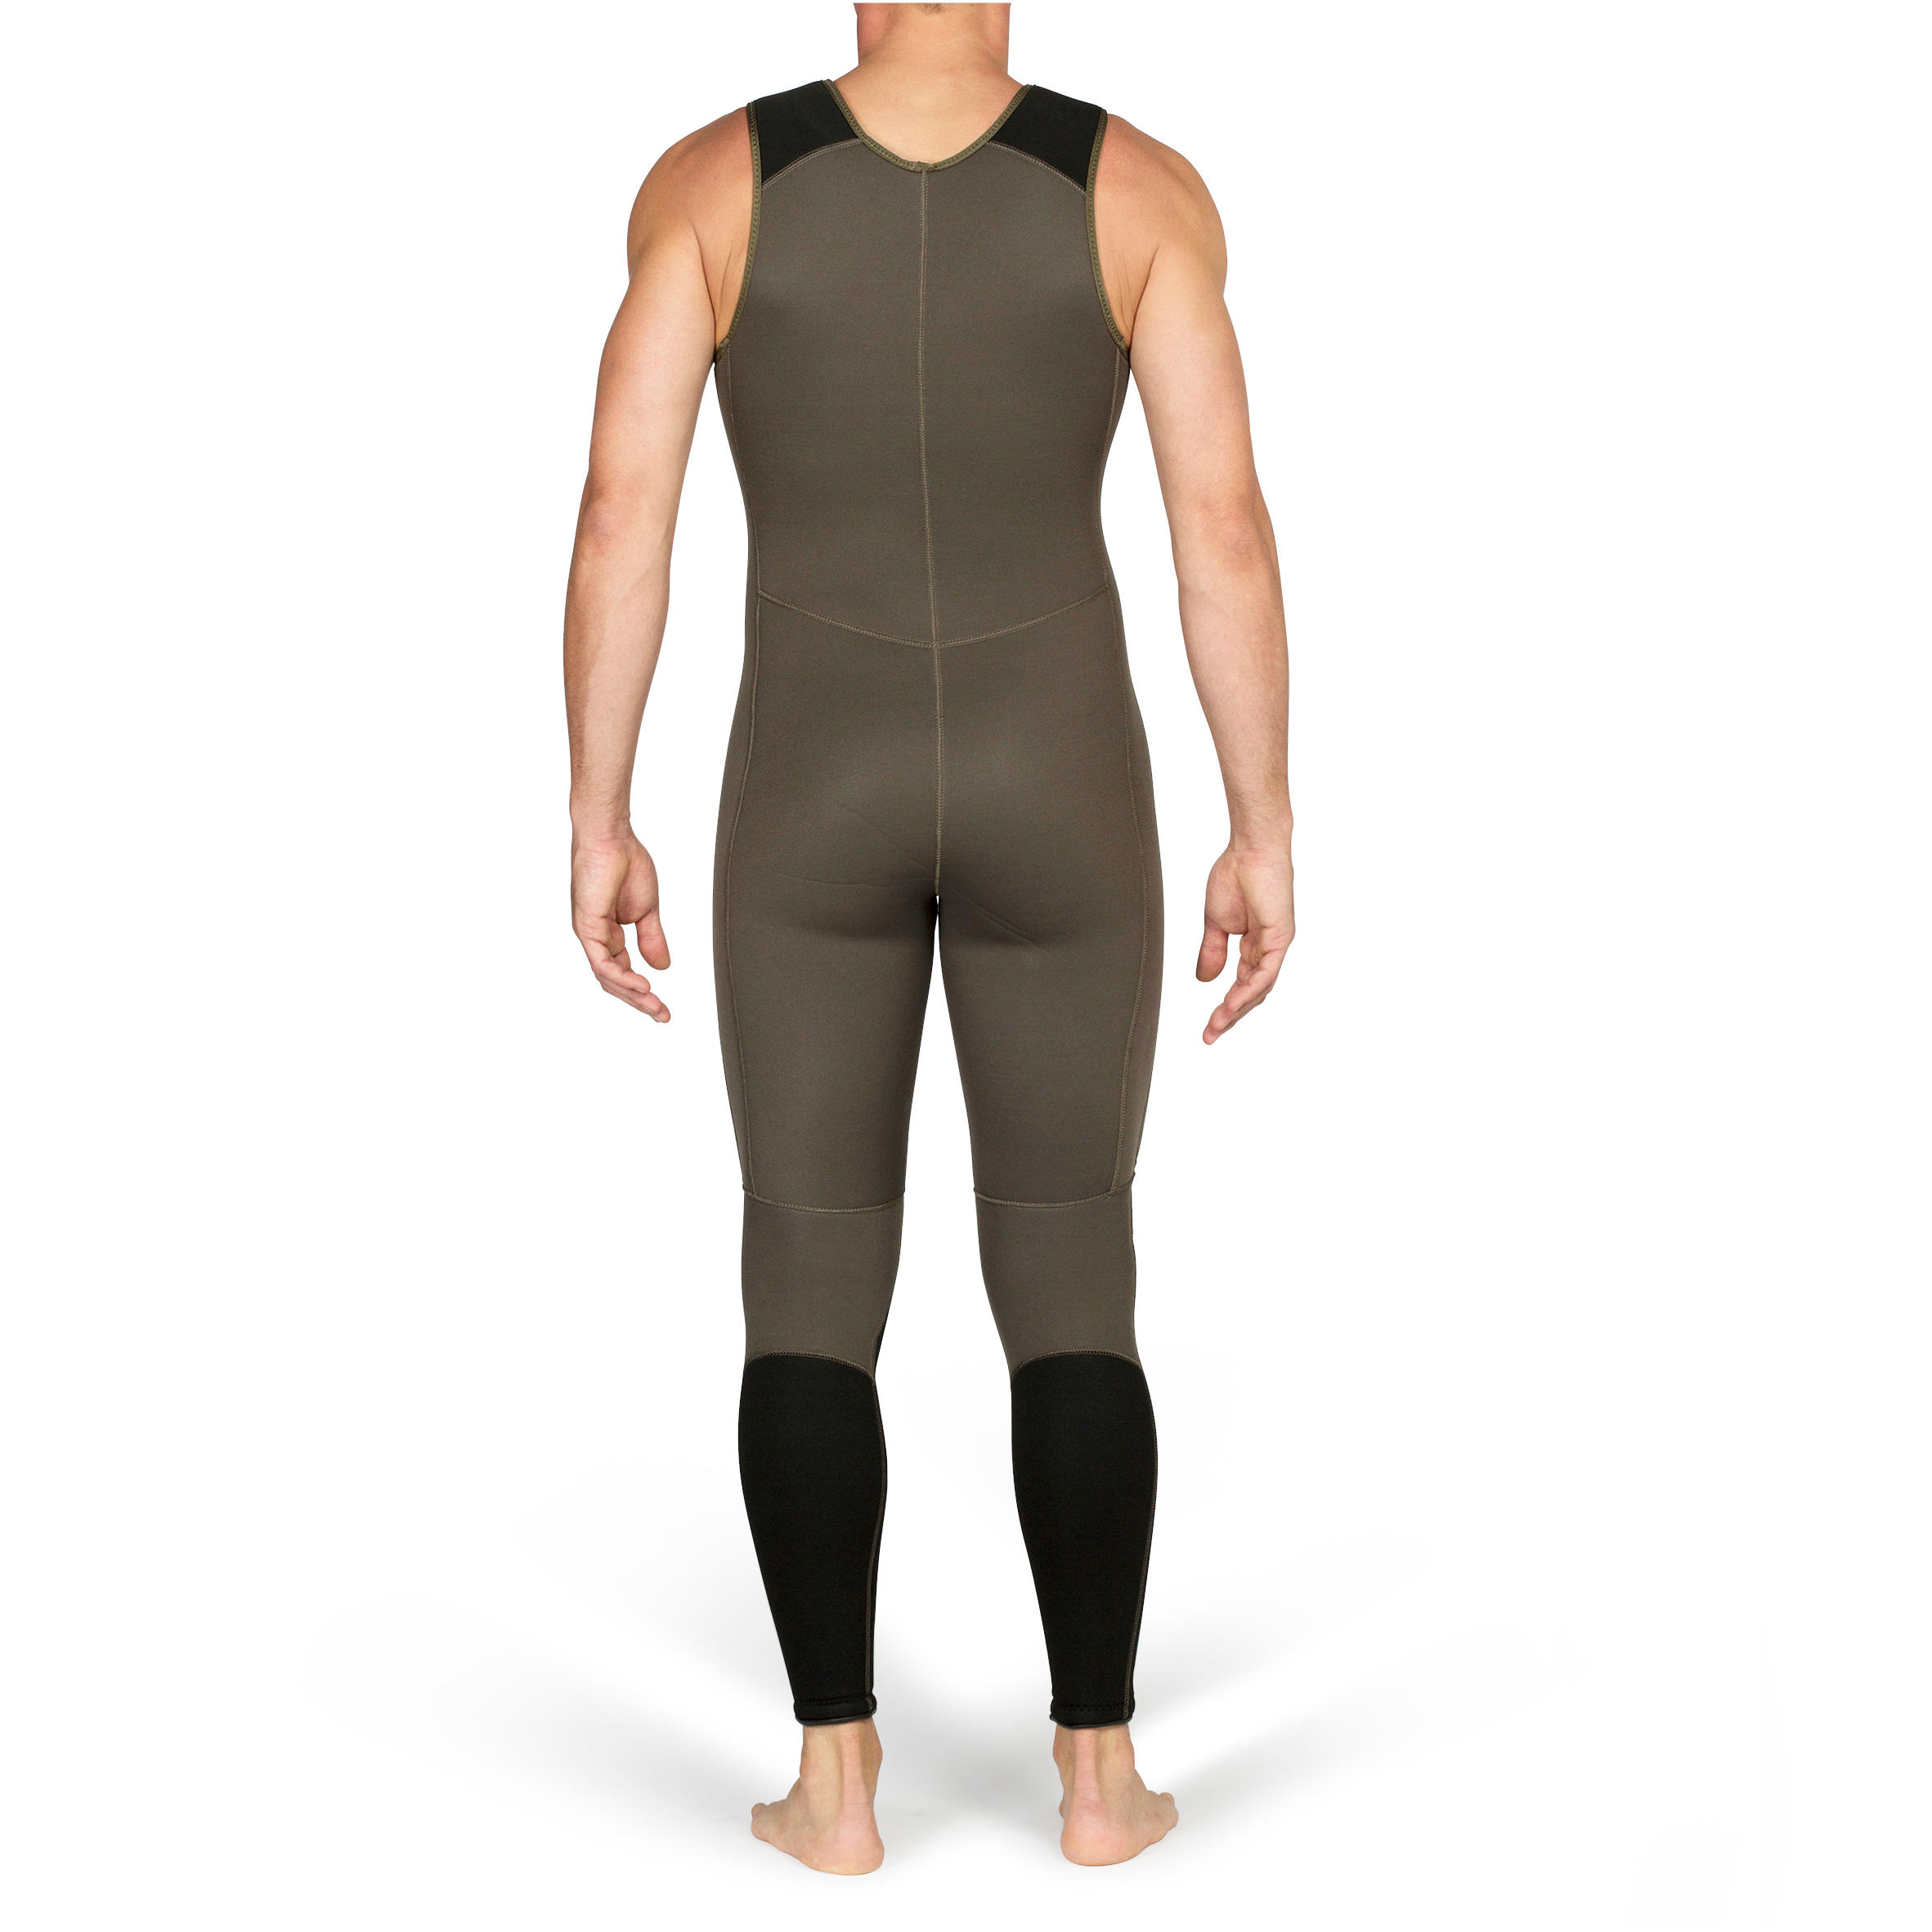 Men's spearfishing sleeveless wetsuit 7 mm neoprene SPF 500 khaki 4/13